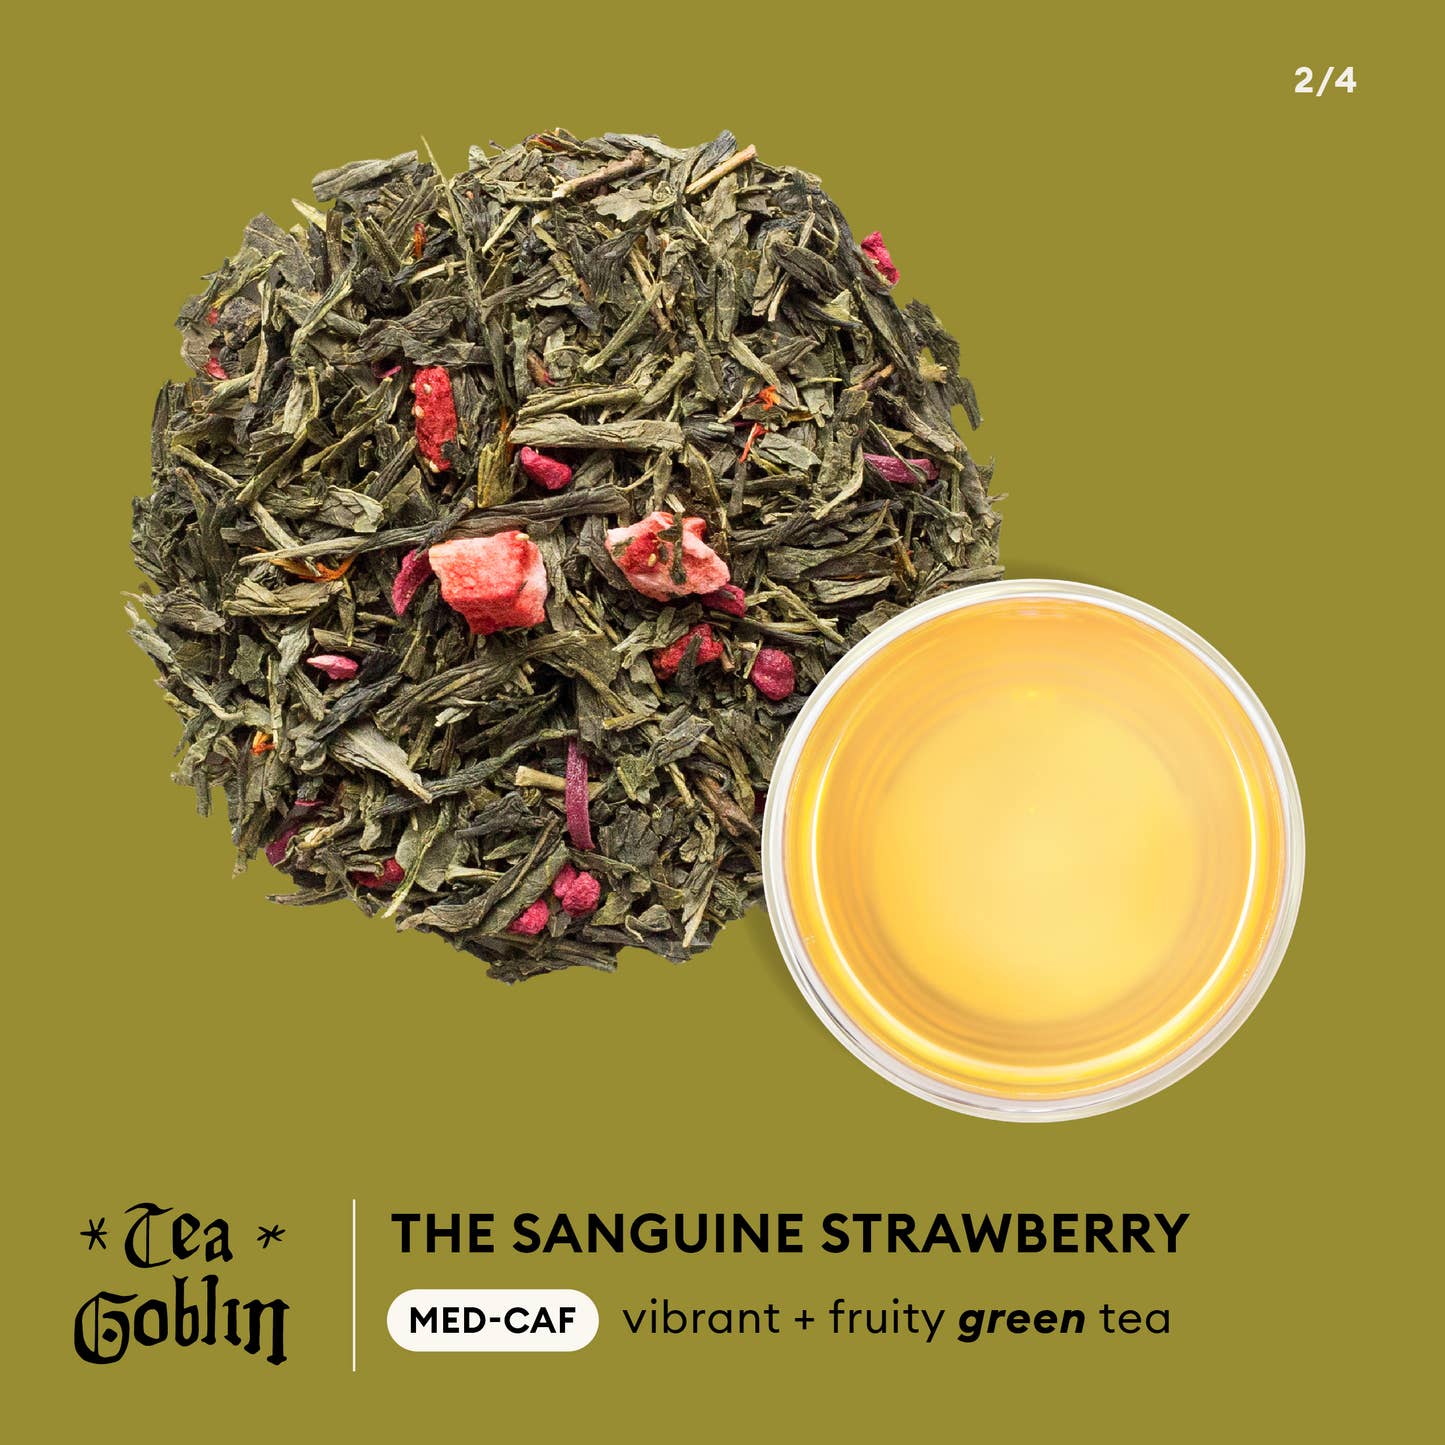 Tea Goblin - The Sanguine Strawberry med-caf, vibrant + fruity infographic